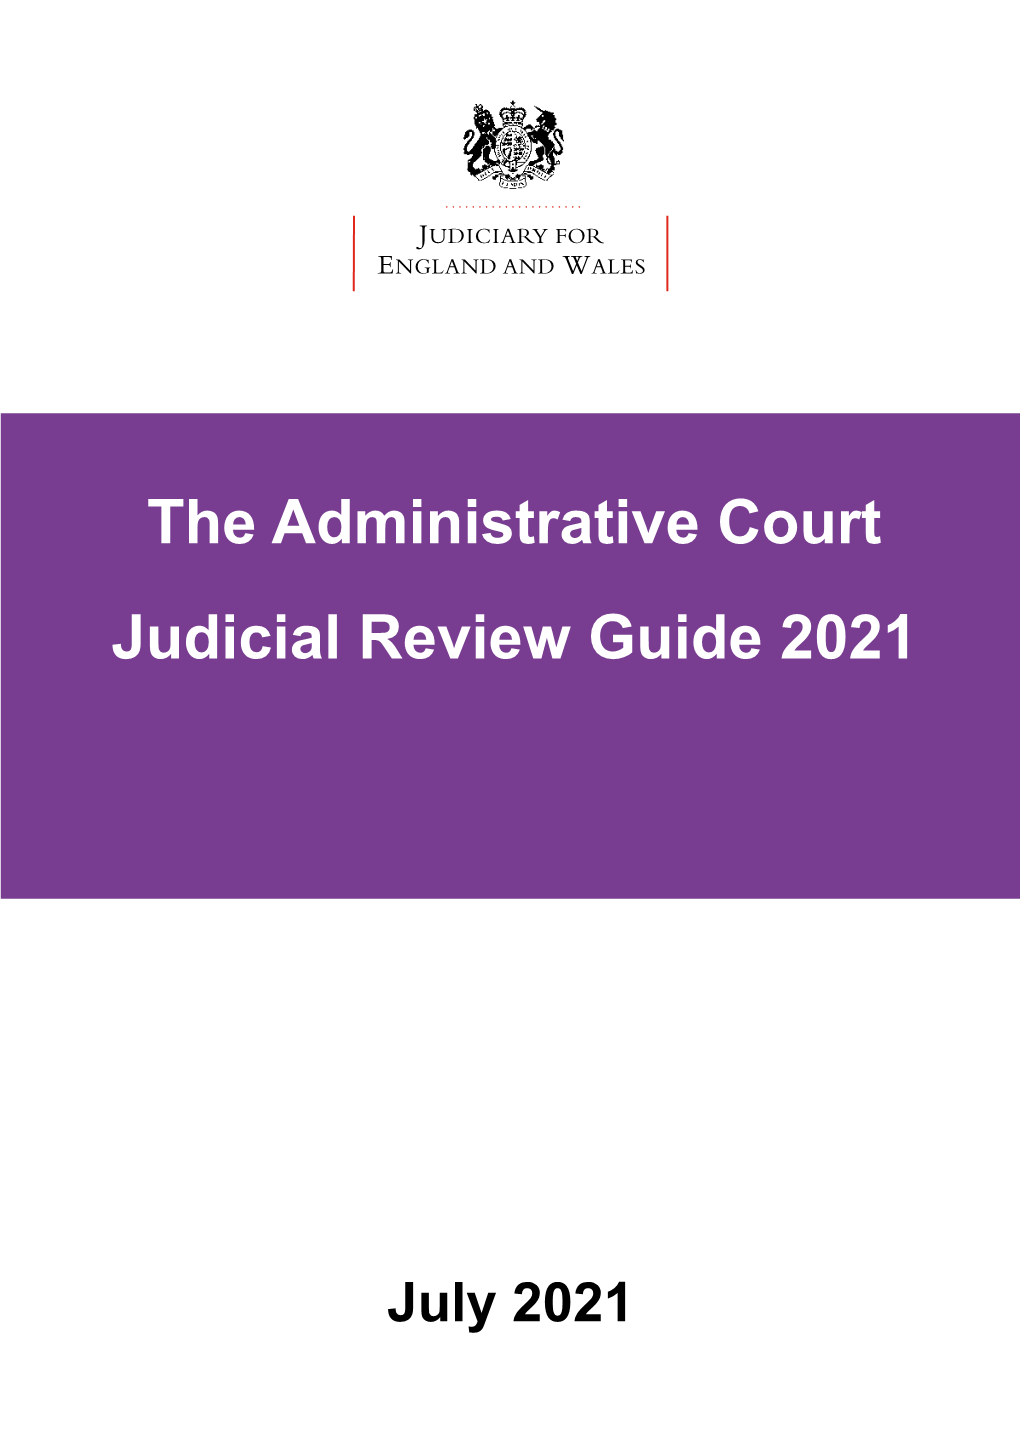 The Administrative Court Judicial Review Guide 2020